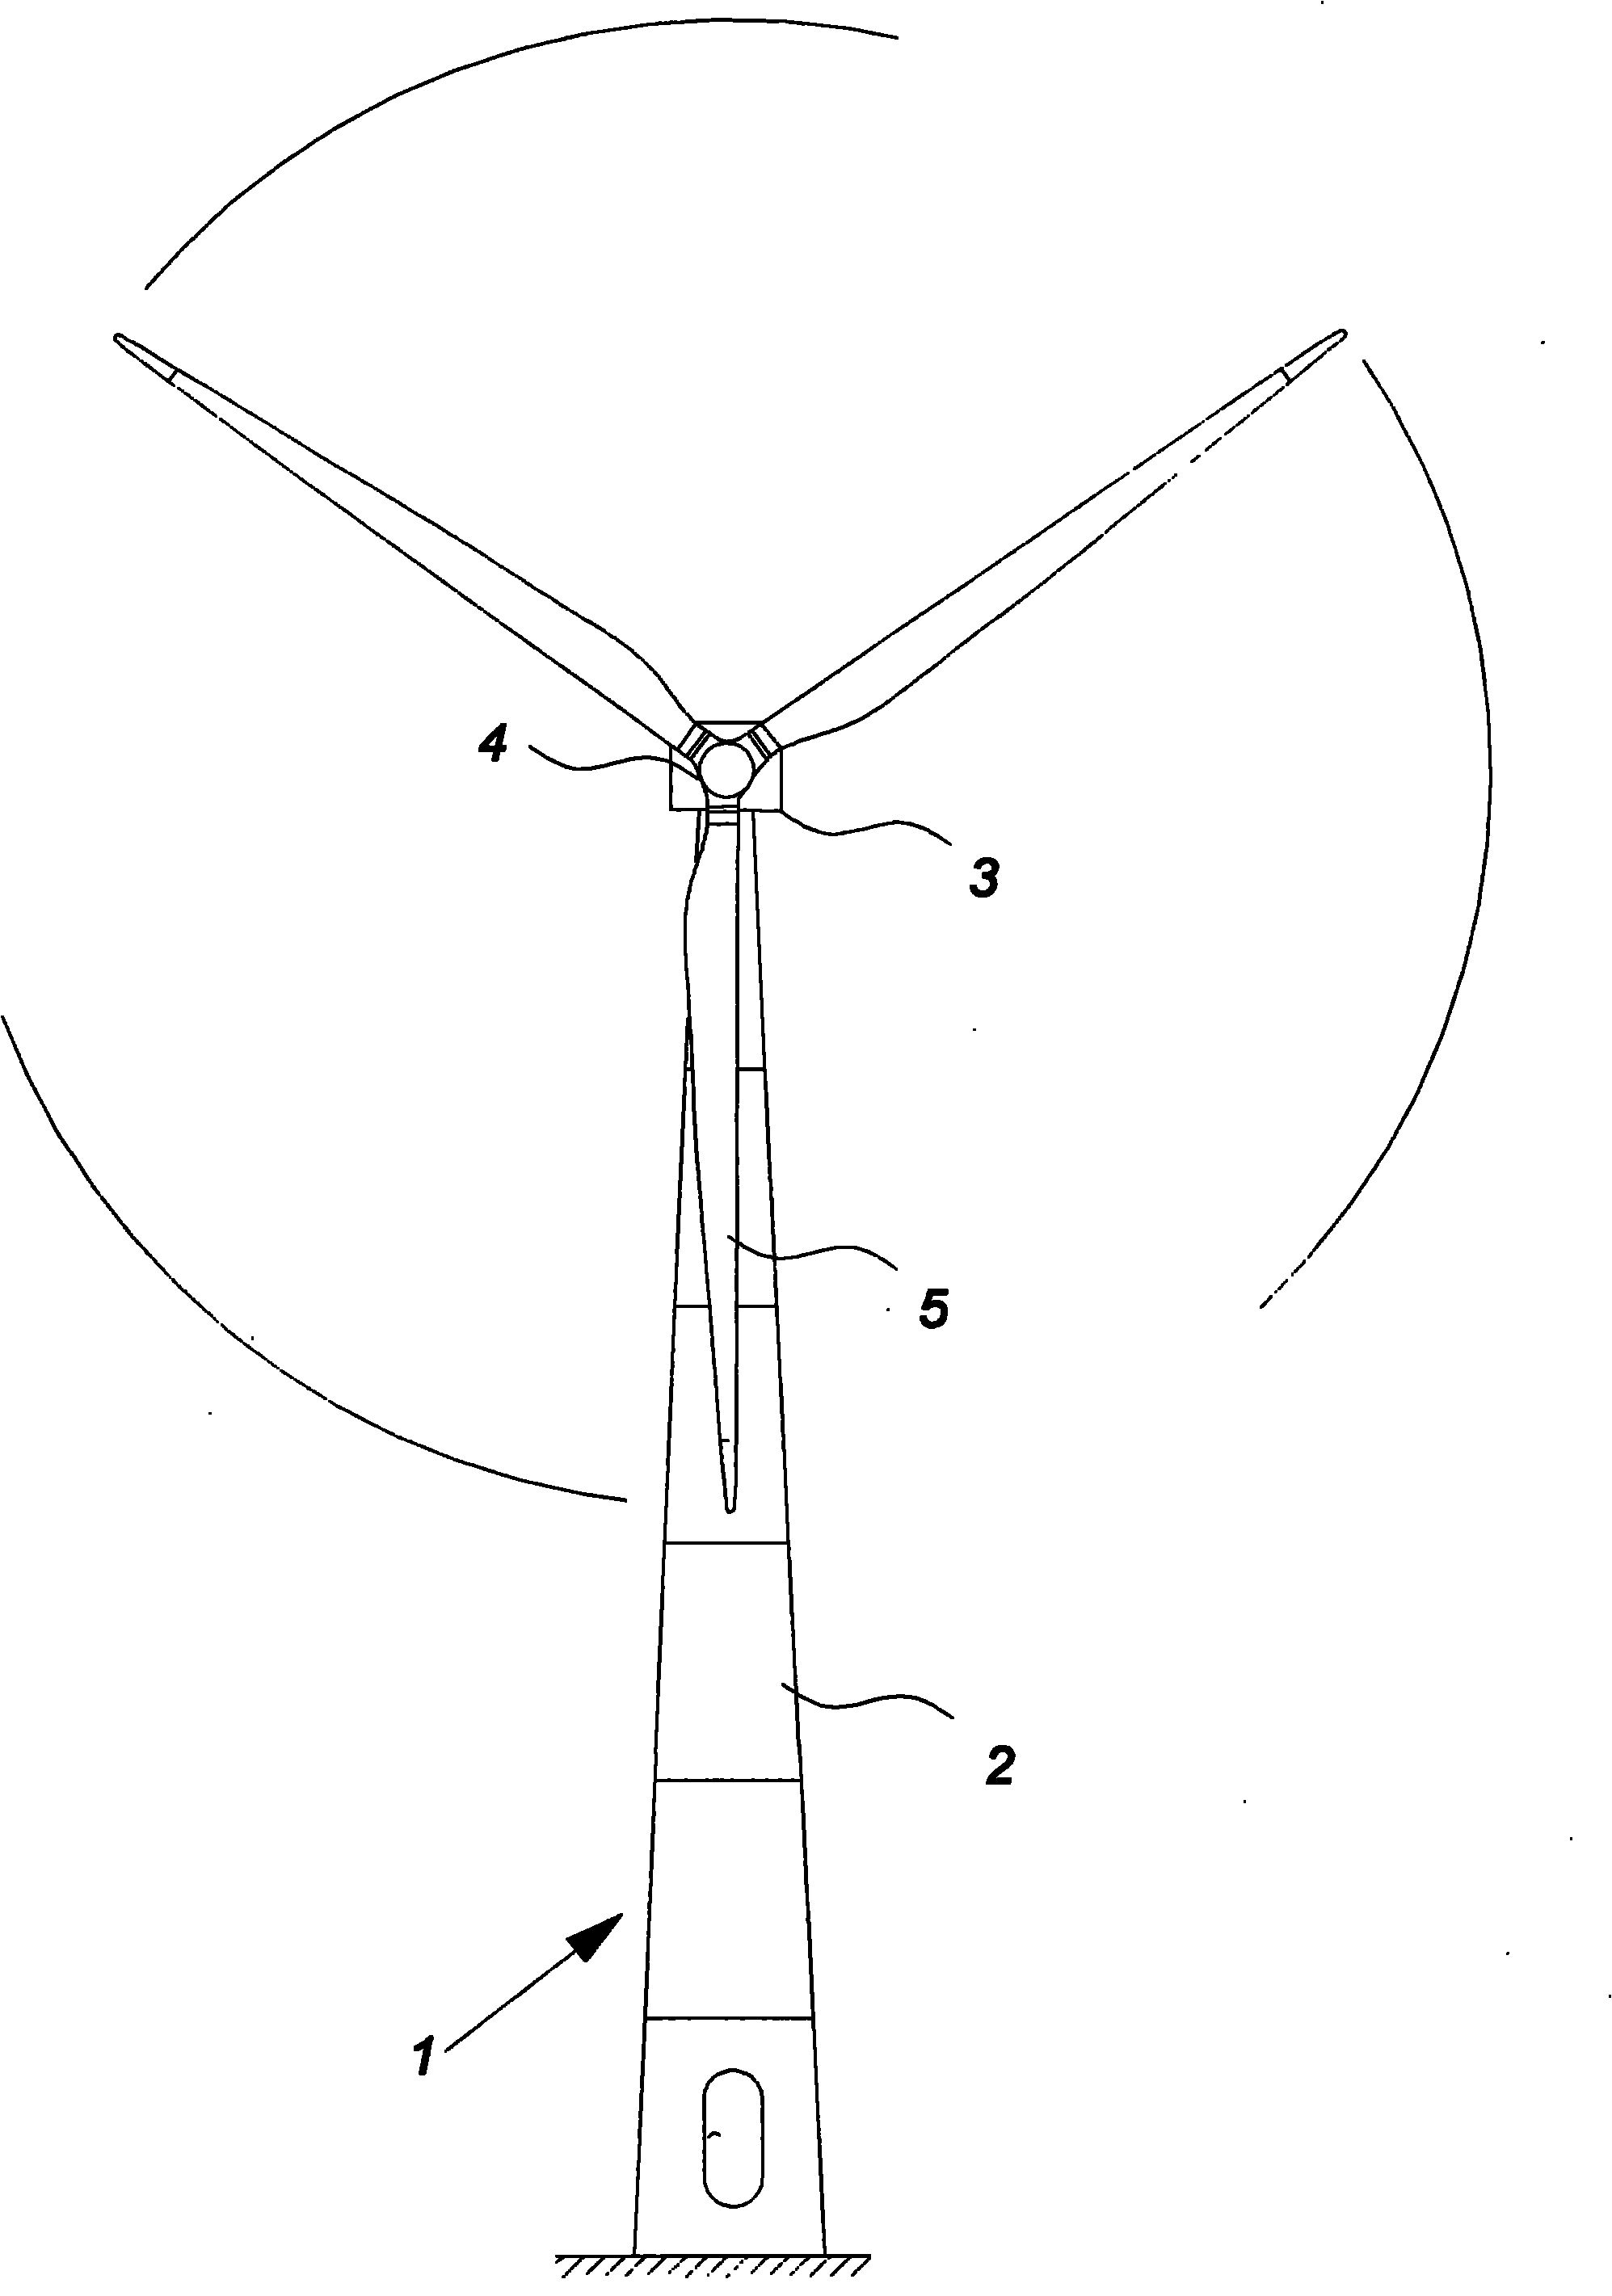 Epicyclic gear stage for a wind turbine gearbox, a wind turbine gearbox and a wind turbine